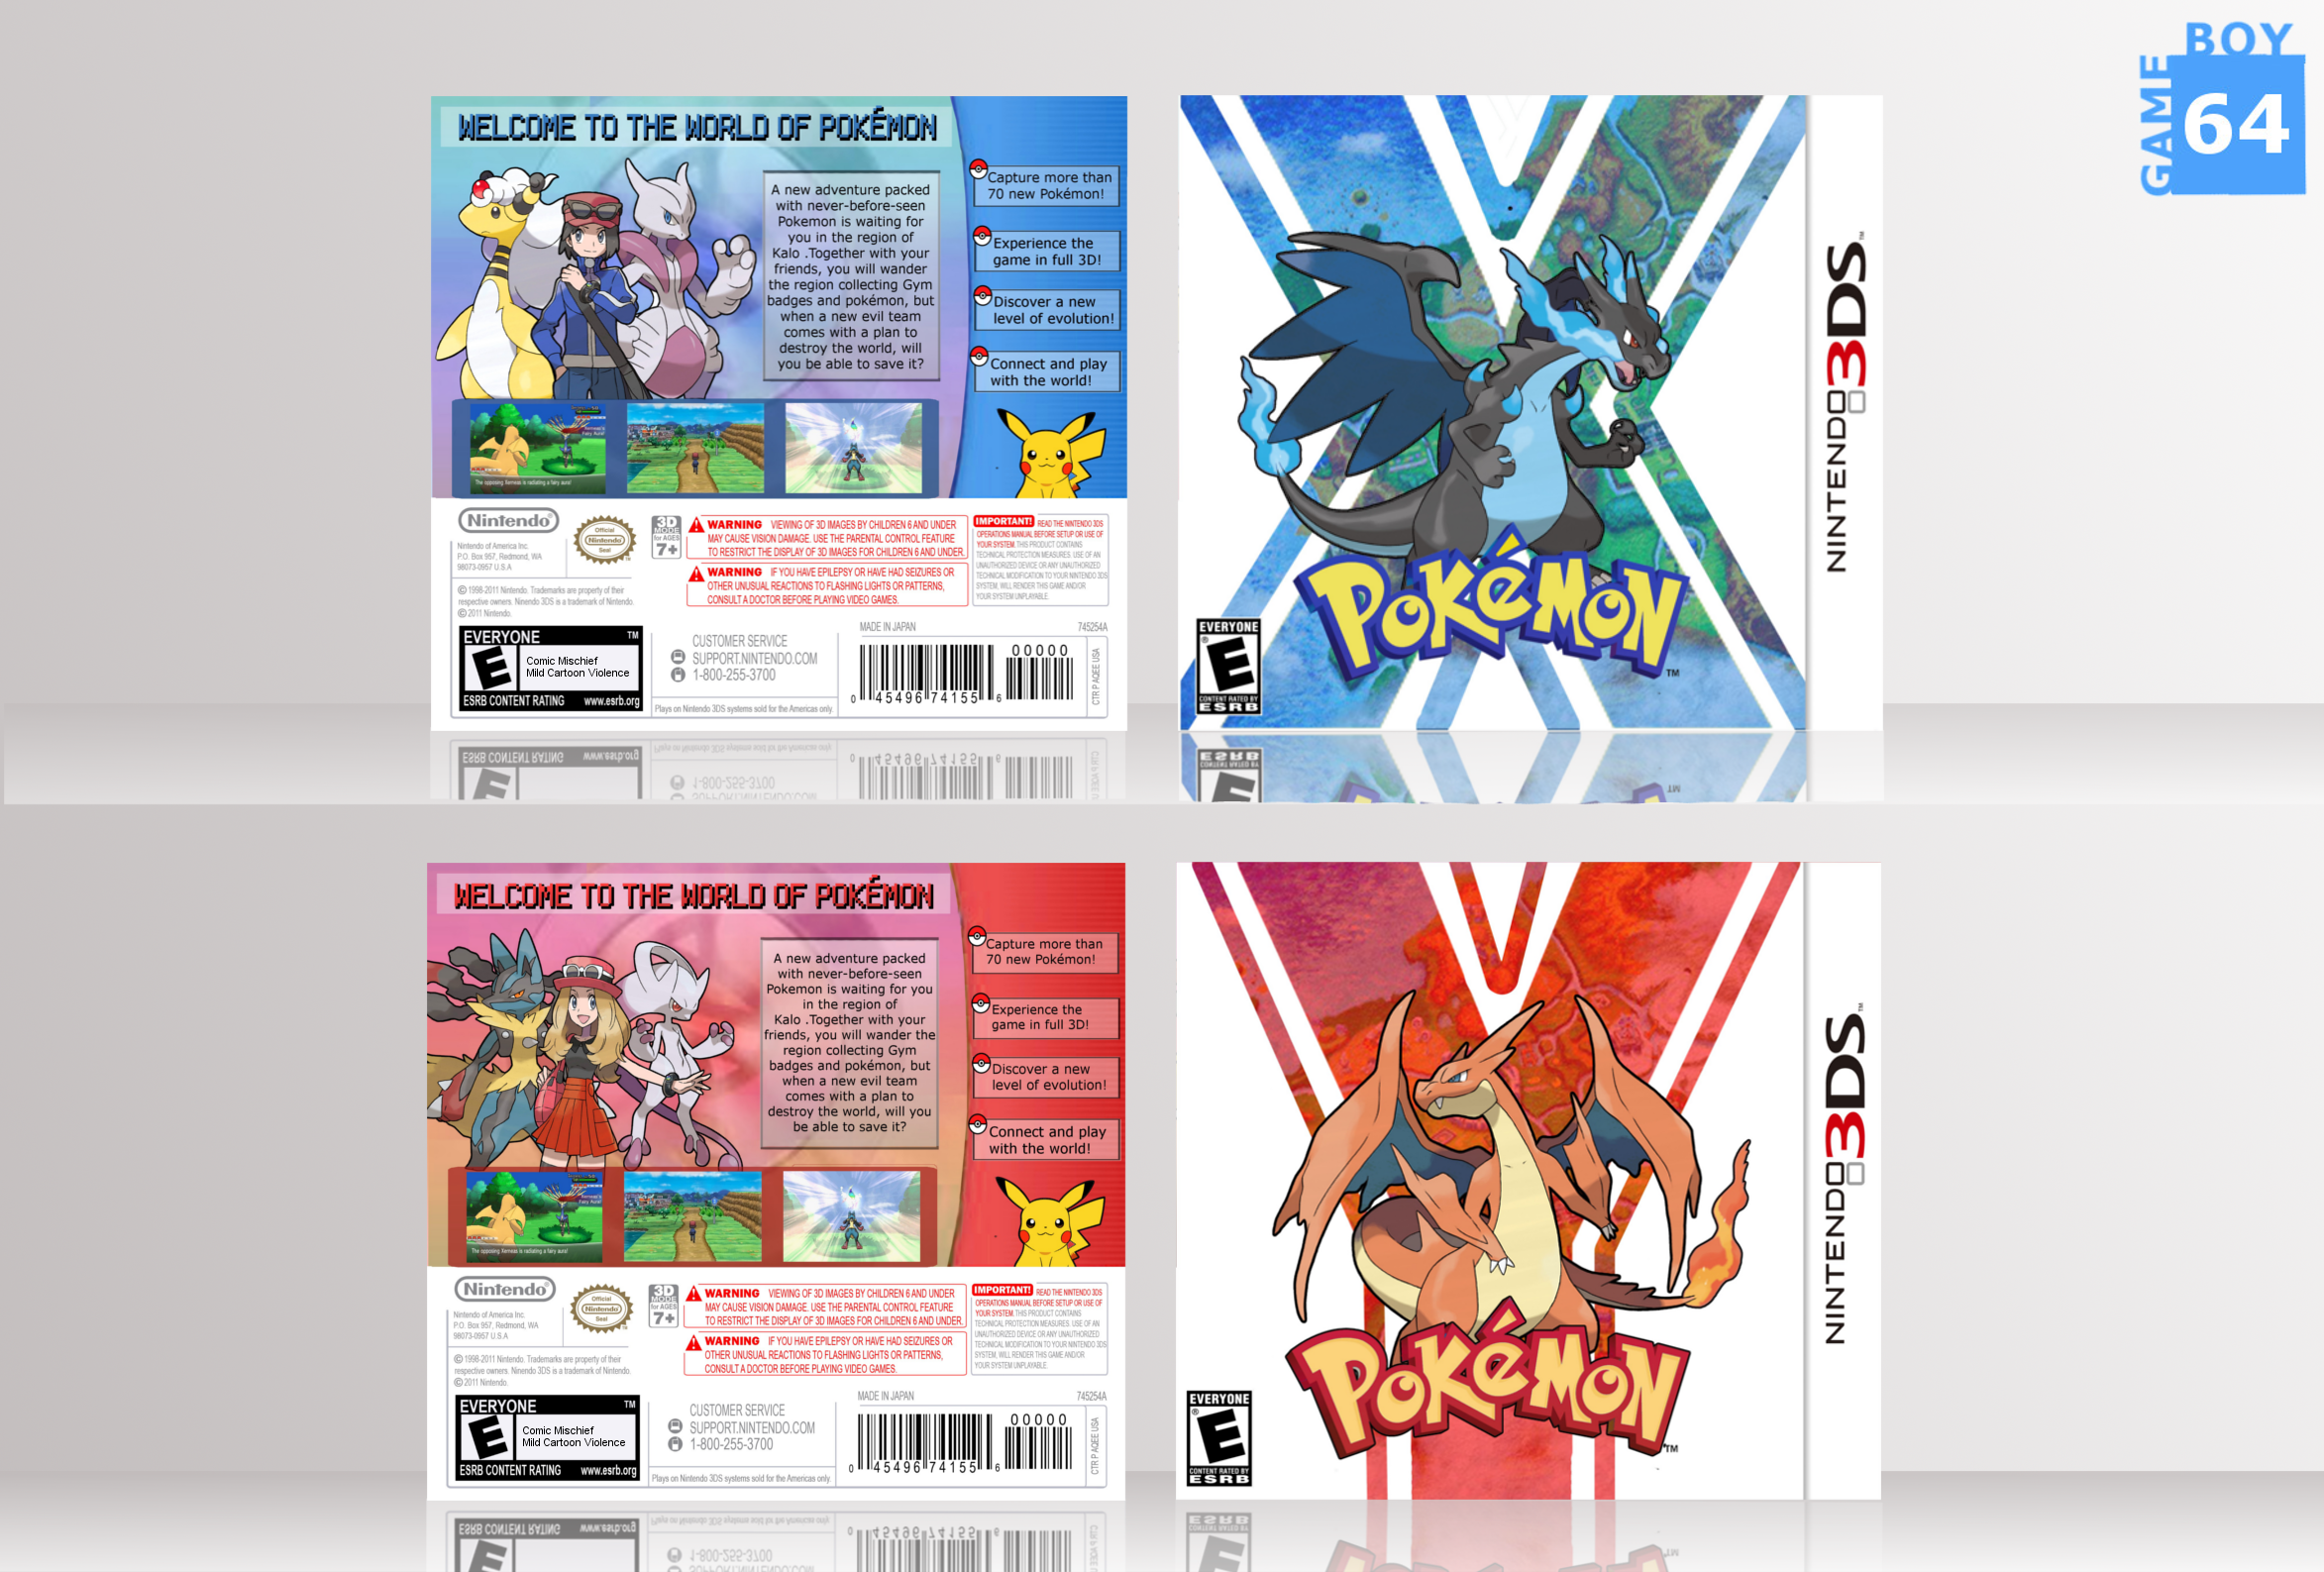 Pokemon X & Pokemon Y box cover